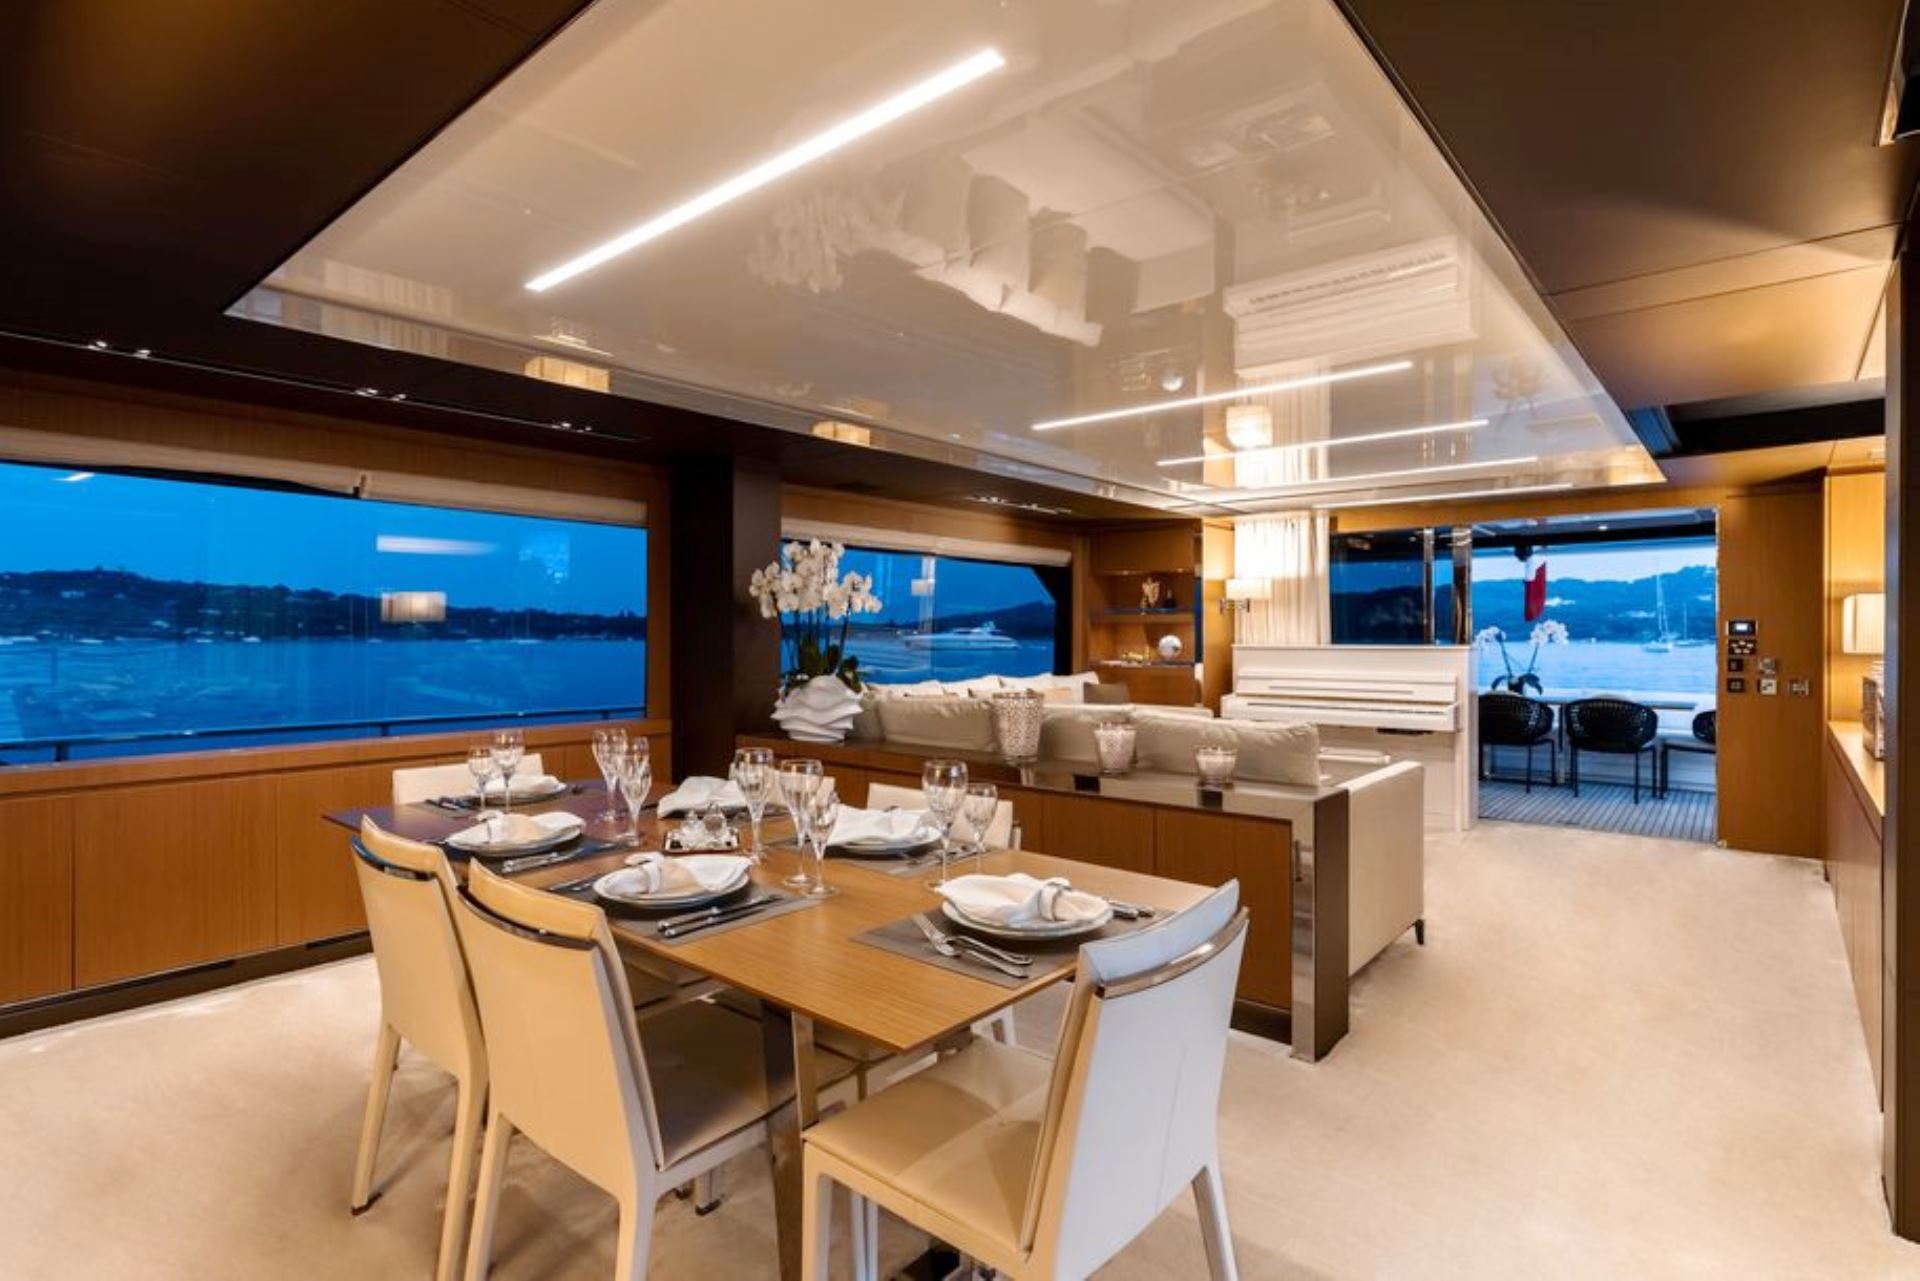 Riva 100 Corsaro Yacht for Charter (2018)